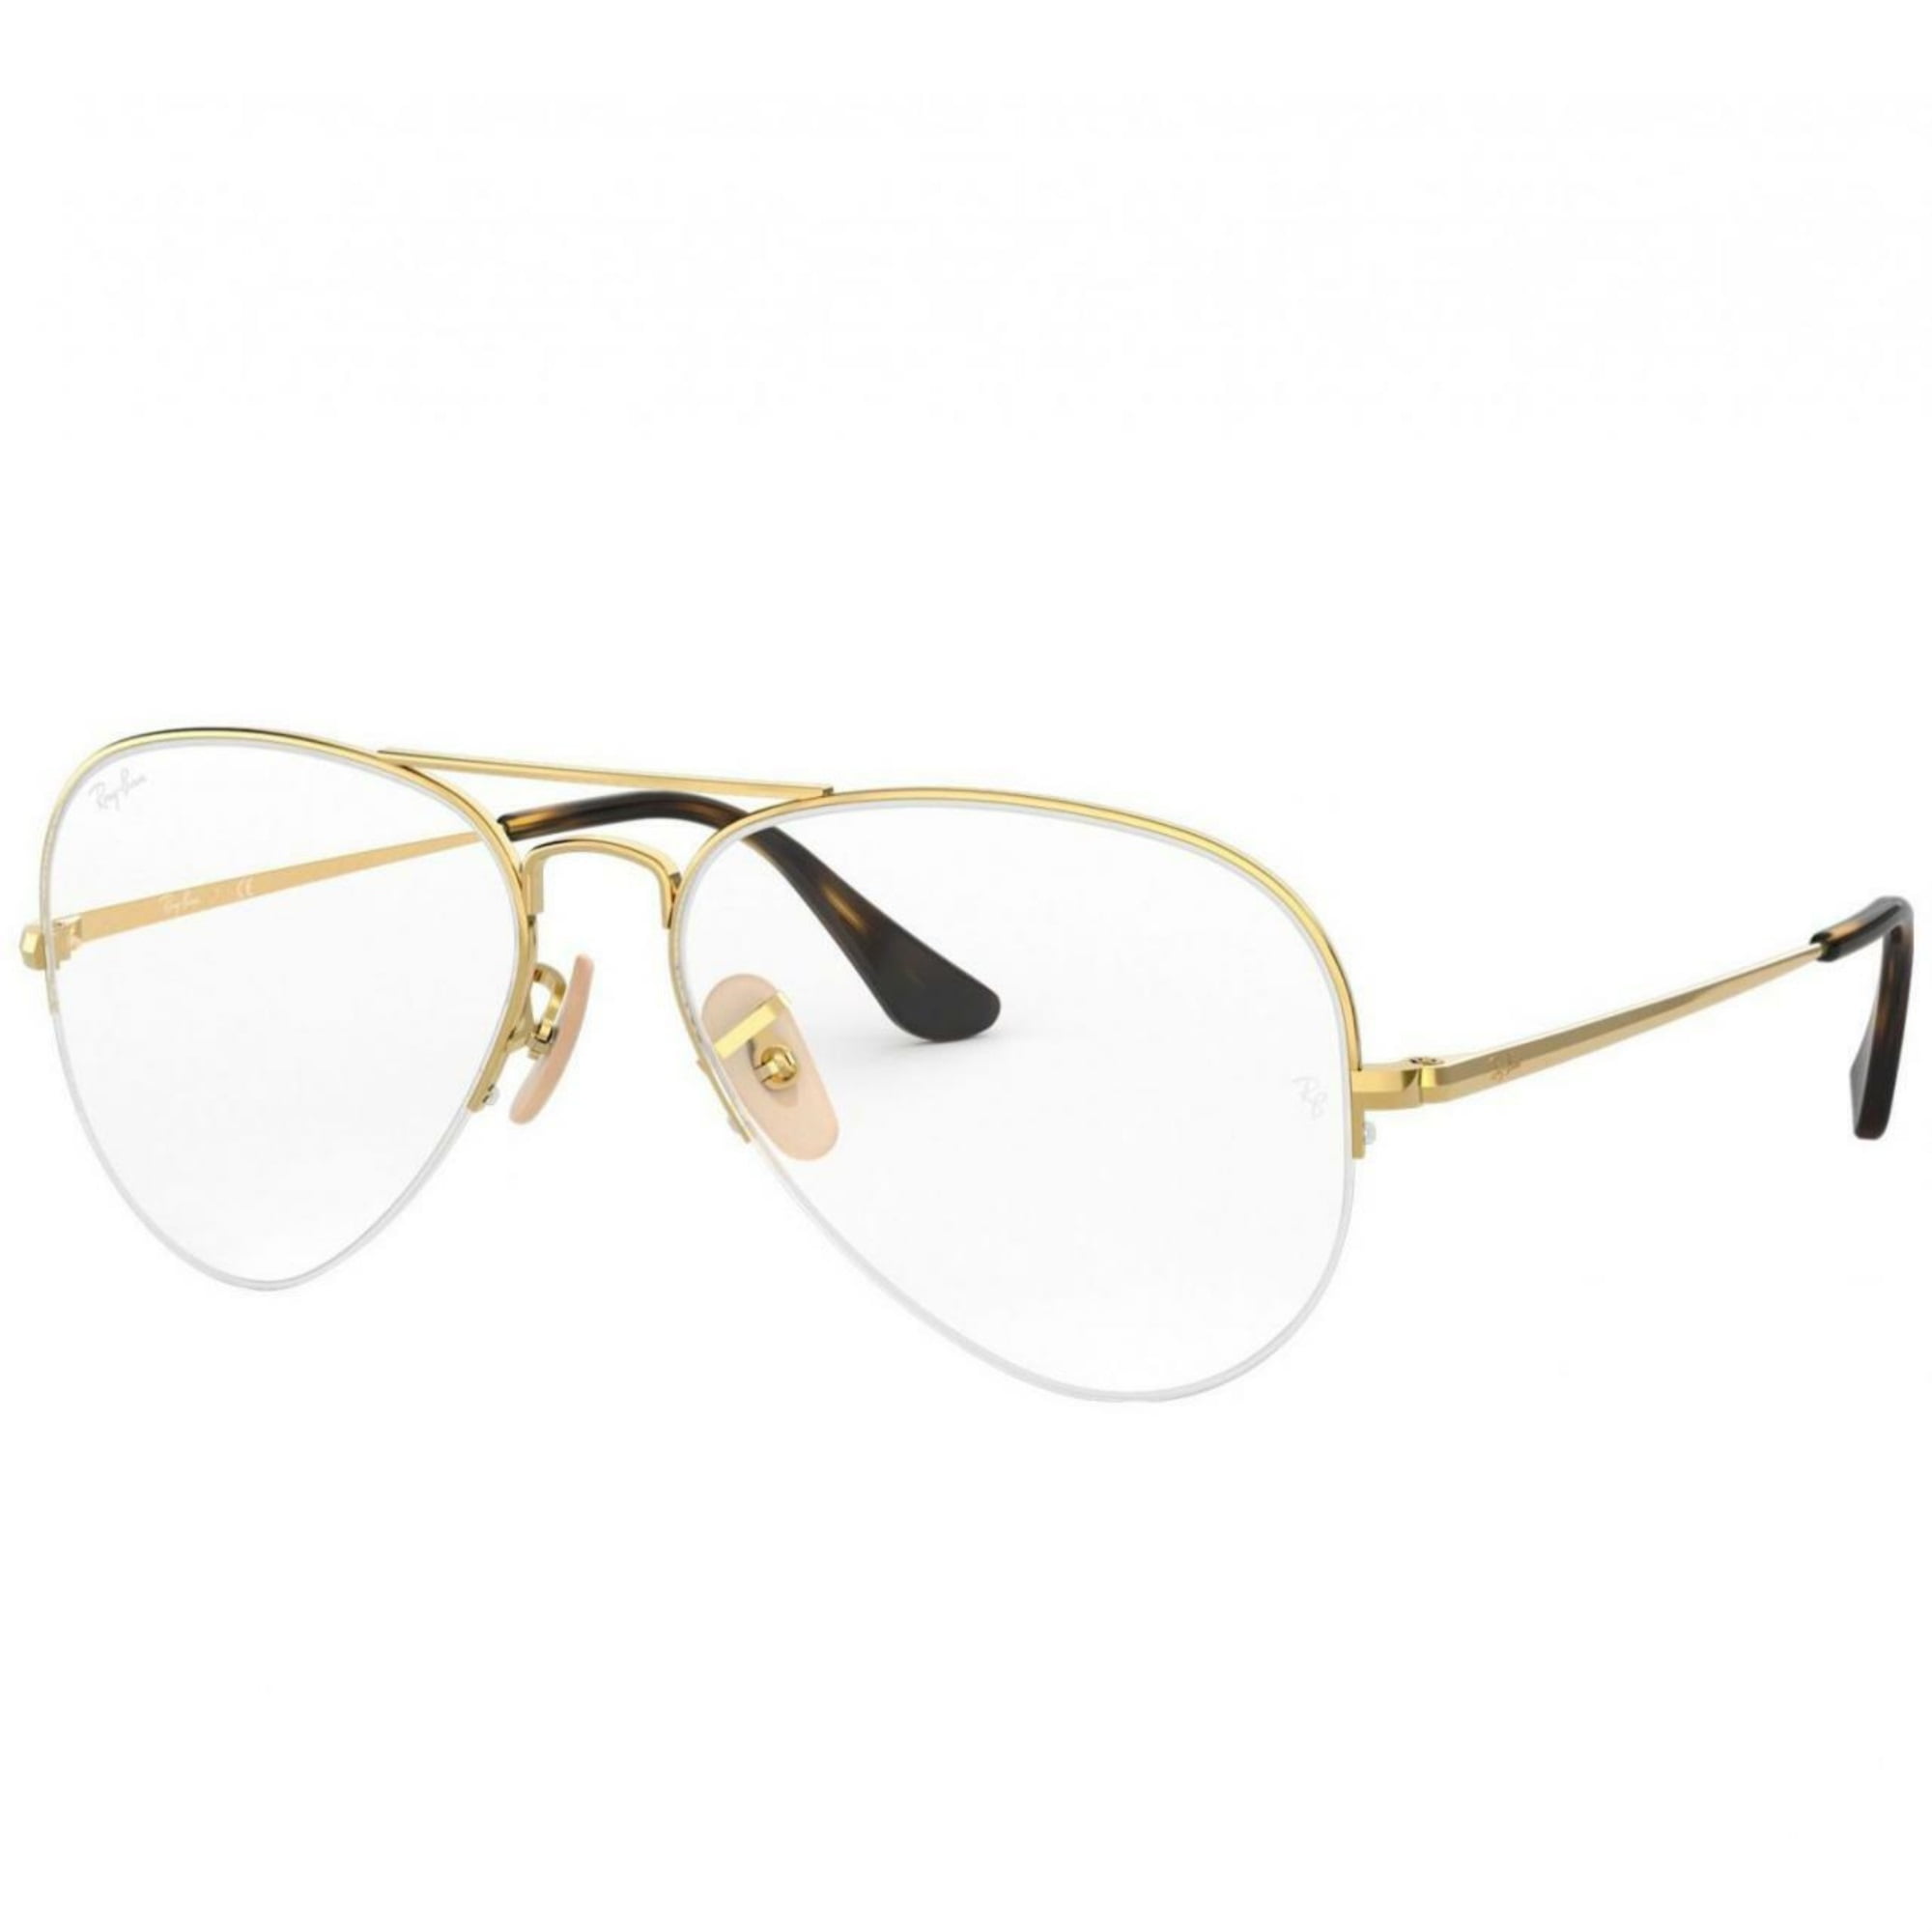 Prevail slids Forslag Ray-Ban RB6589-2500 Gold Aviator Unisex Metal Eyeglasses - Walmart.com